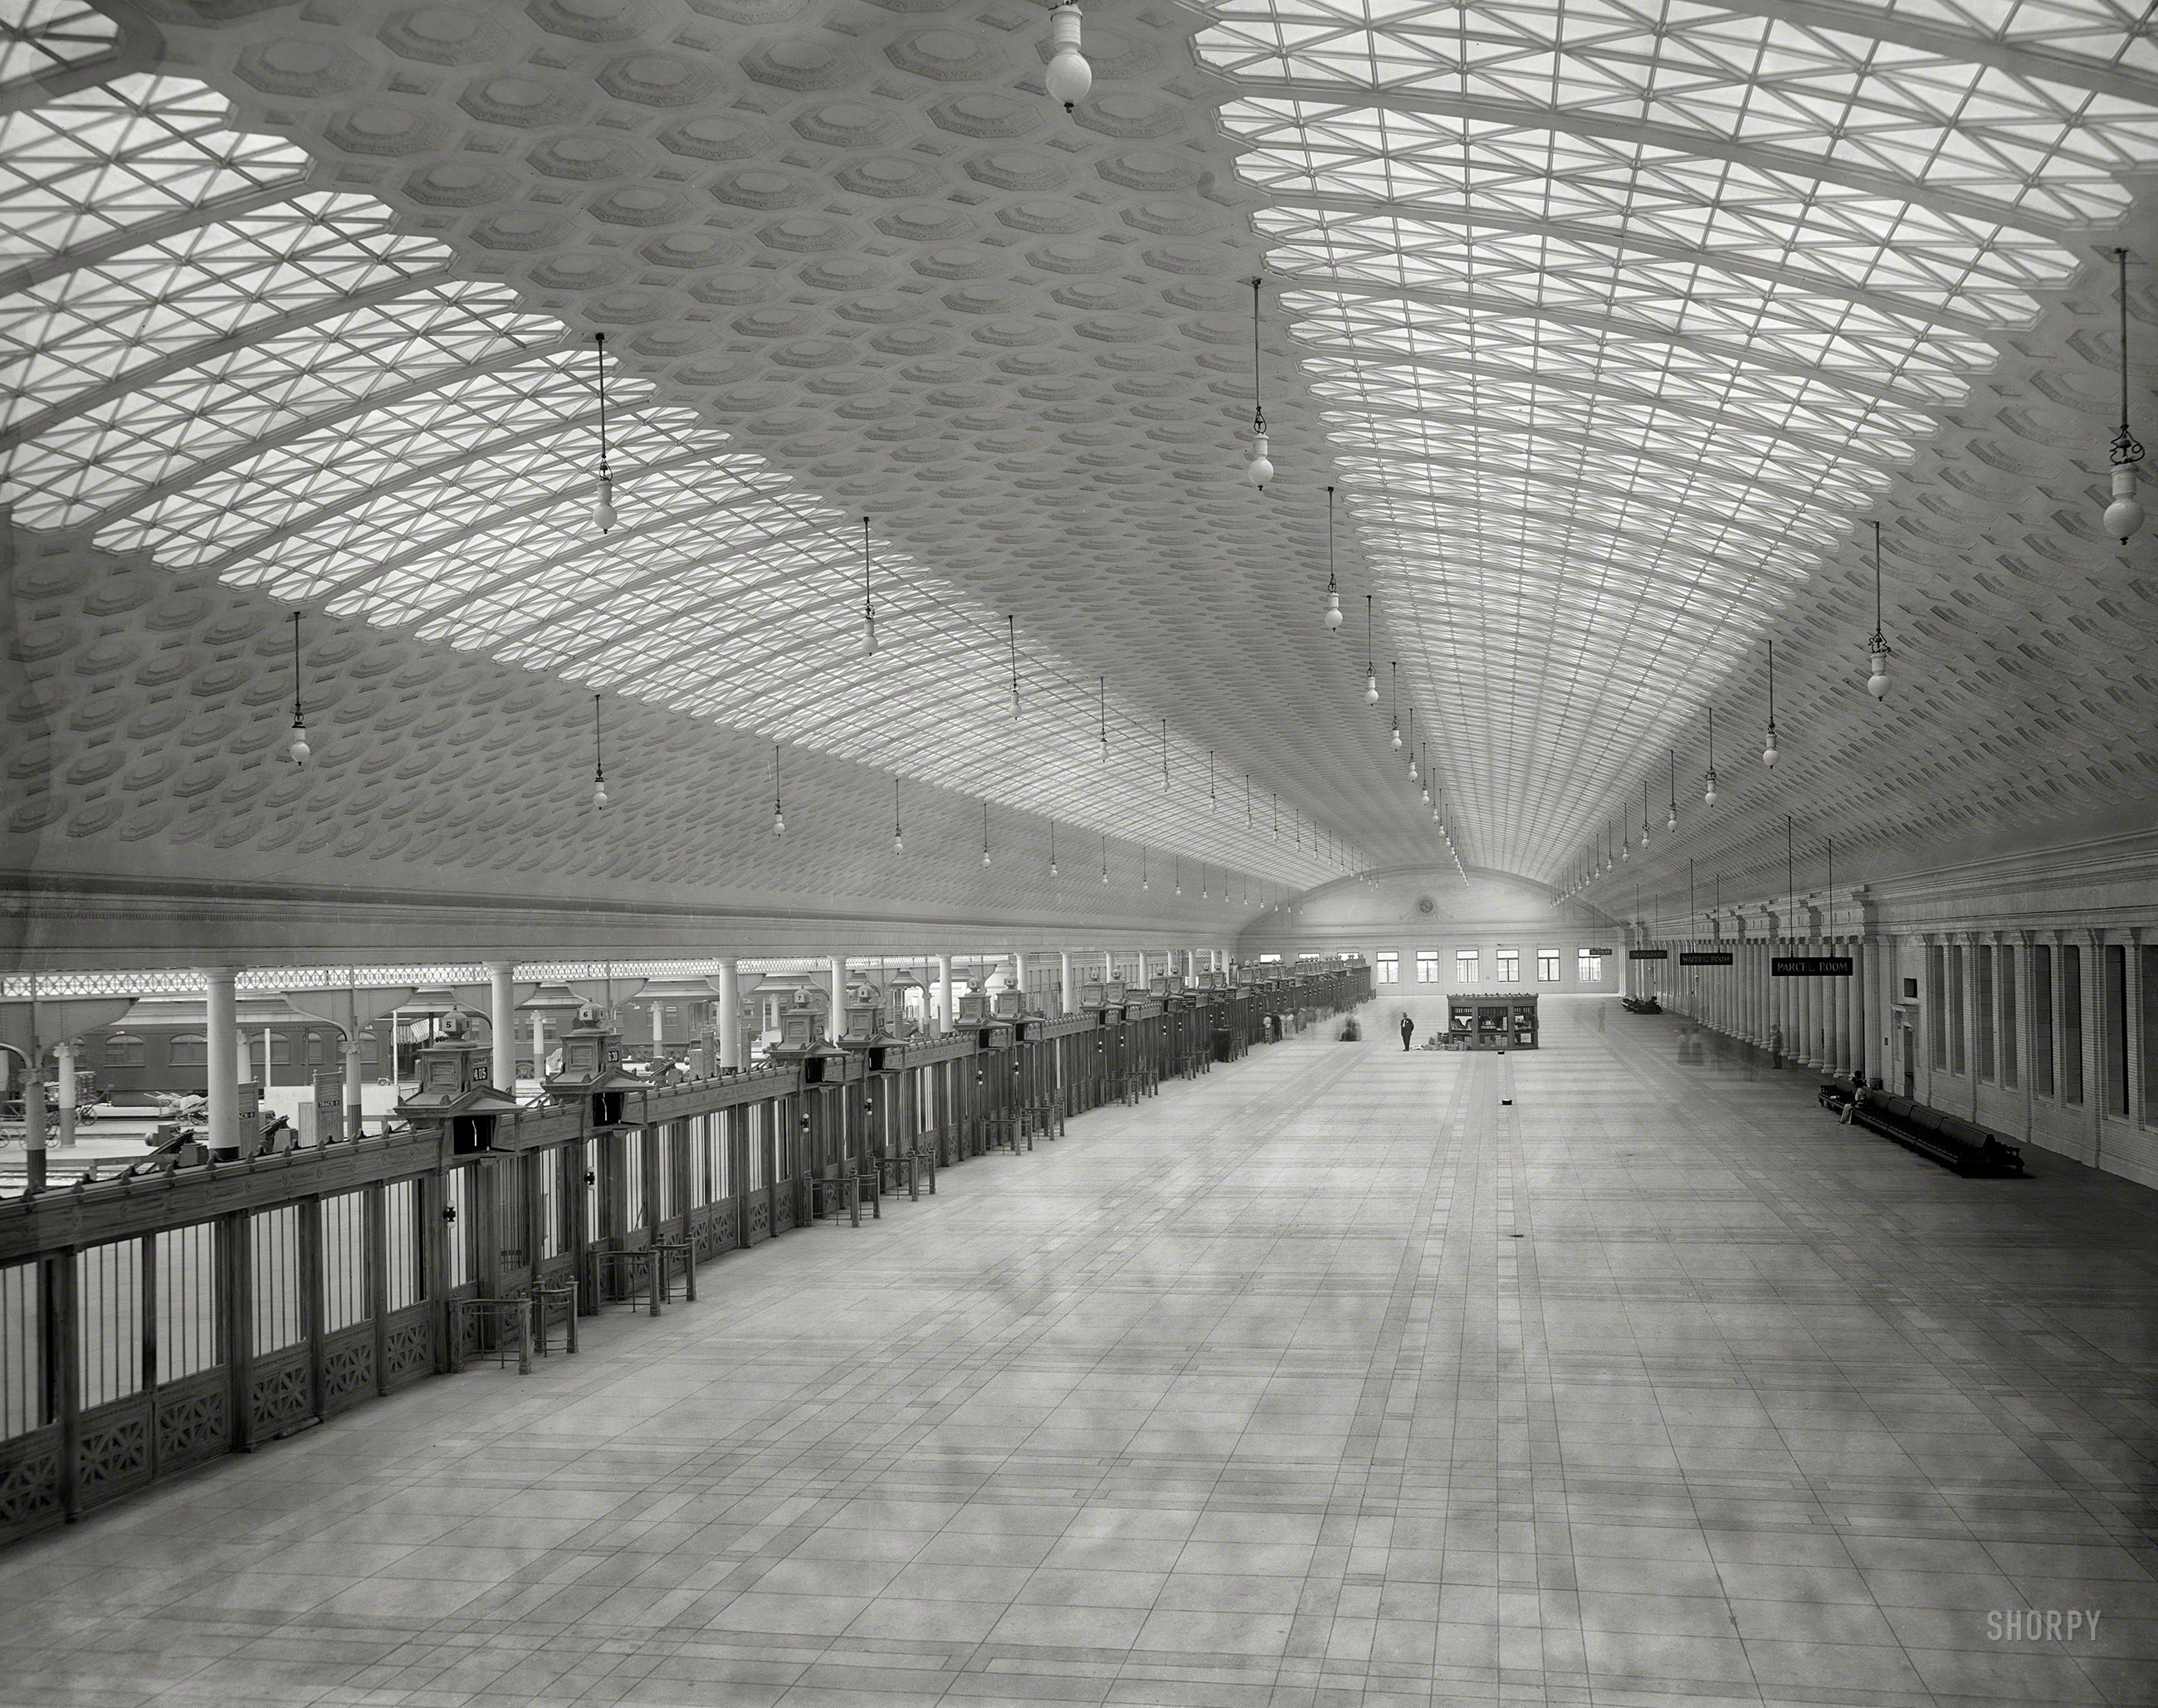 Circa 1910. "Train concourse, Union Station, Washington, D.C." Time exposure capturing hundreds of ephemeral footfalls. 8x10 glass negative. View full size.